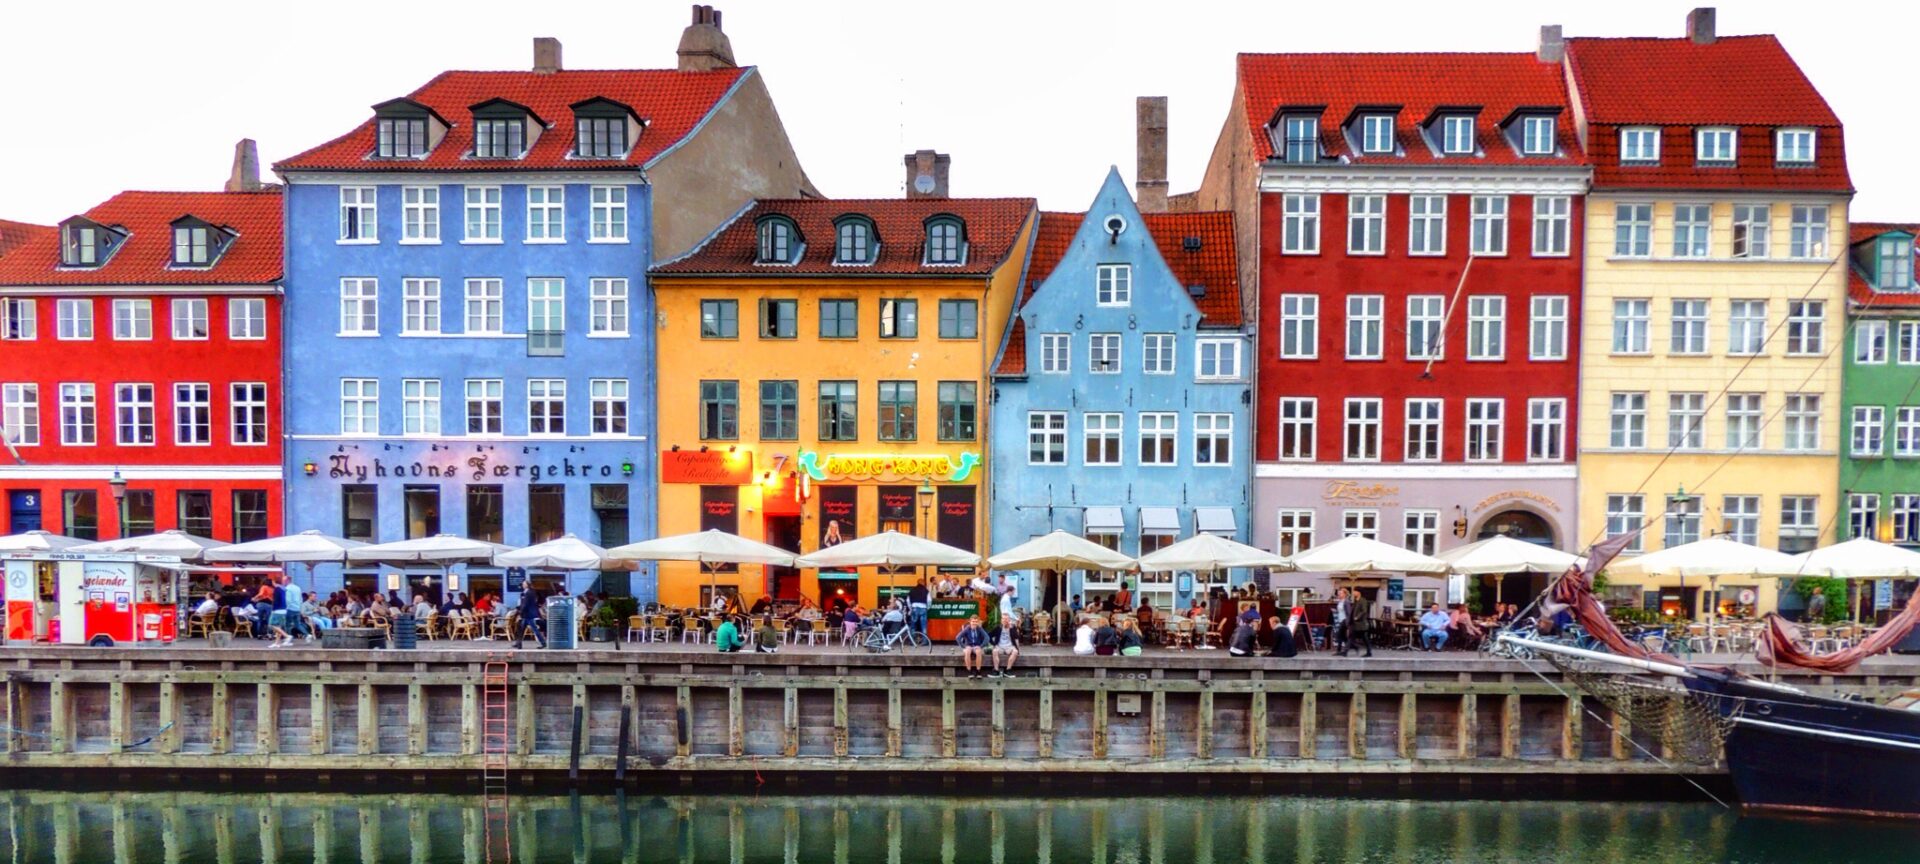 Turismo accesible. Copenhague 